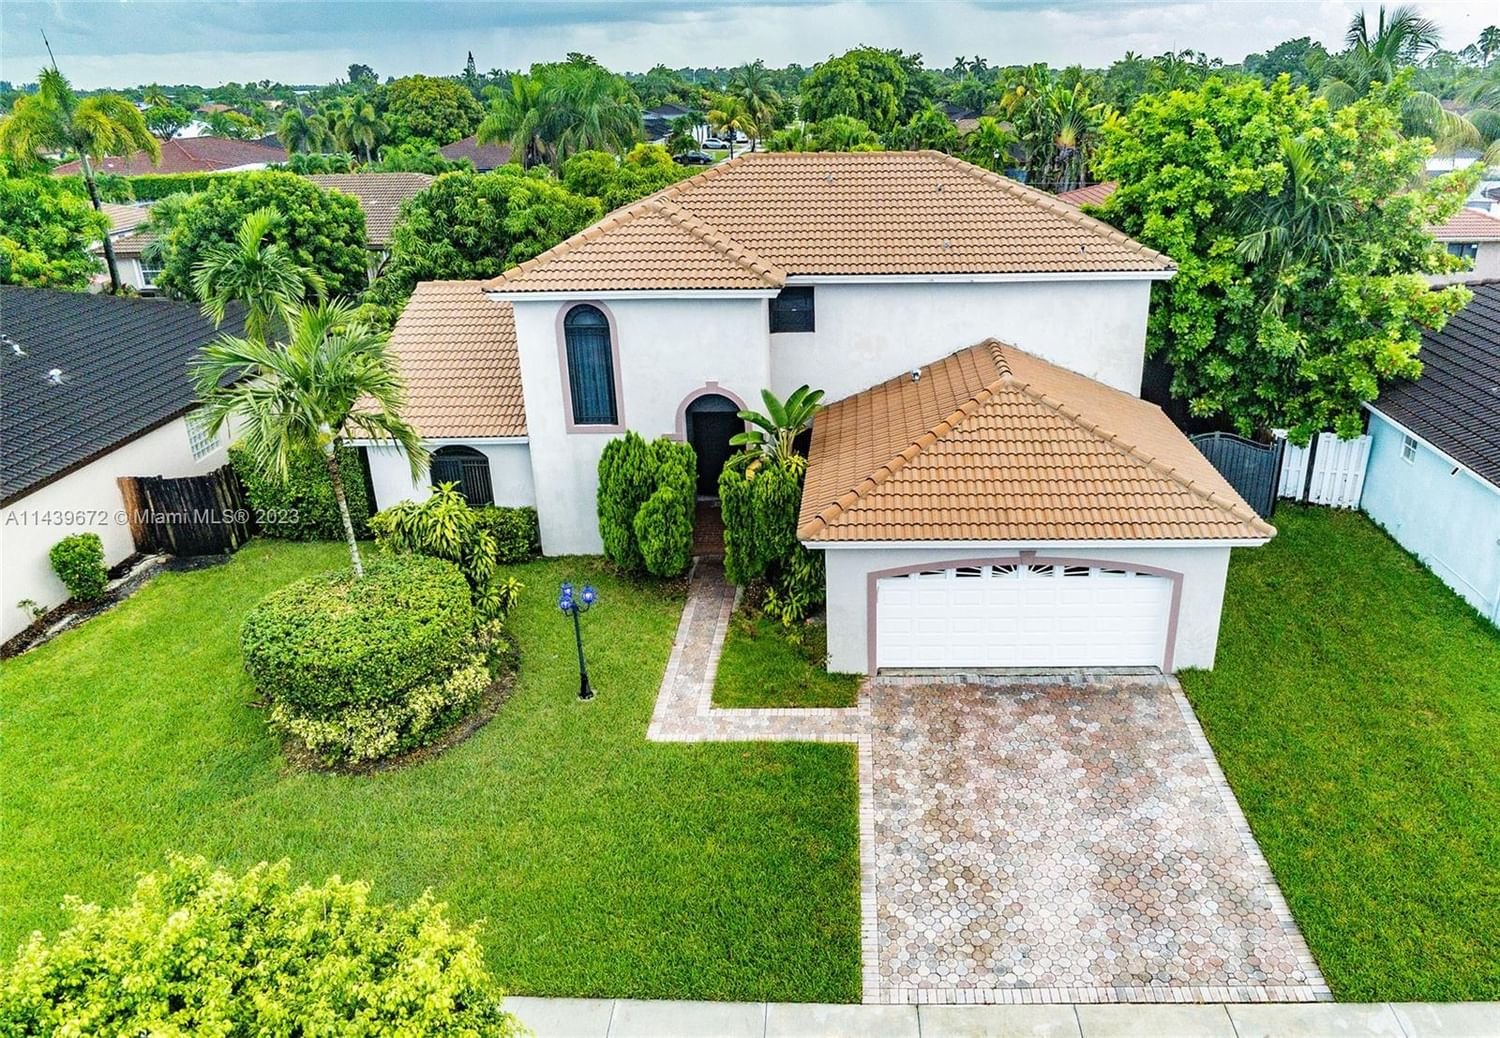 Real estate property located at 16946 153rd Ct, Miami-Dade County, Miami, FL